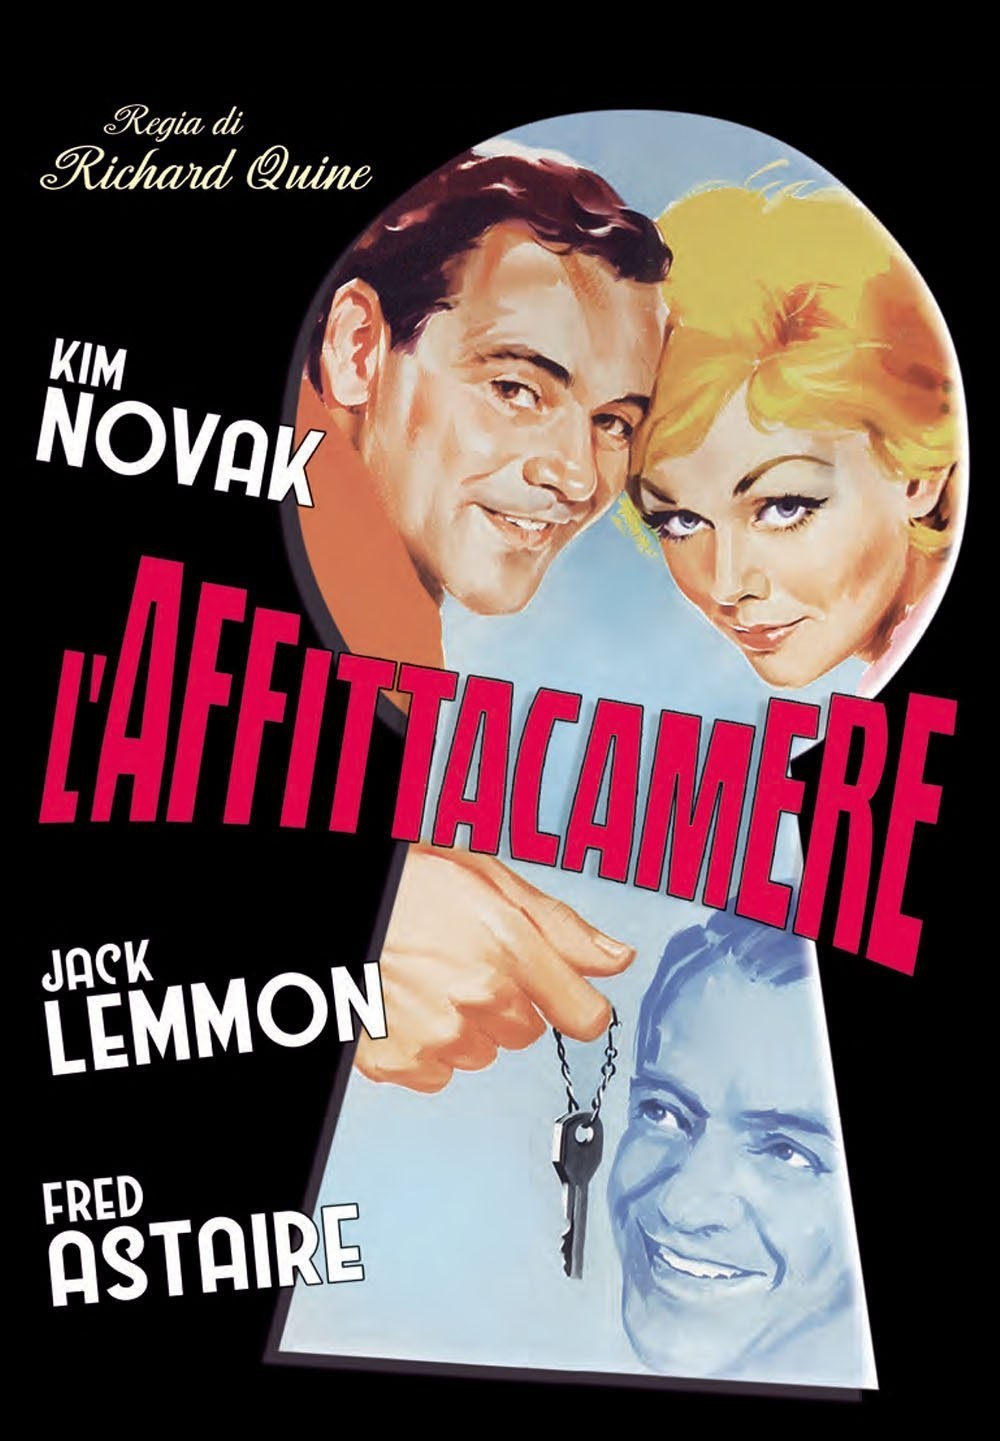 L’affittacamere [B/N] [HD] (1962)